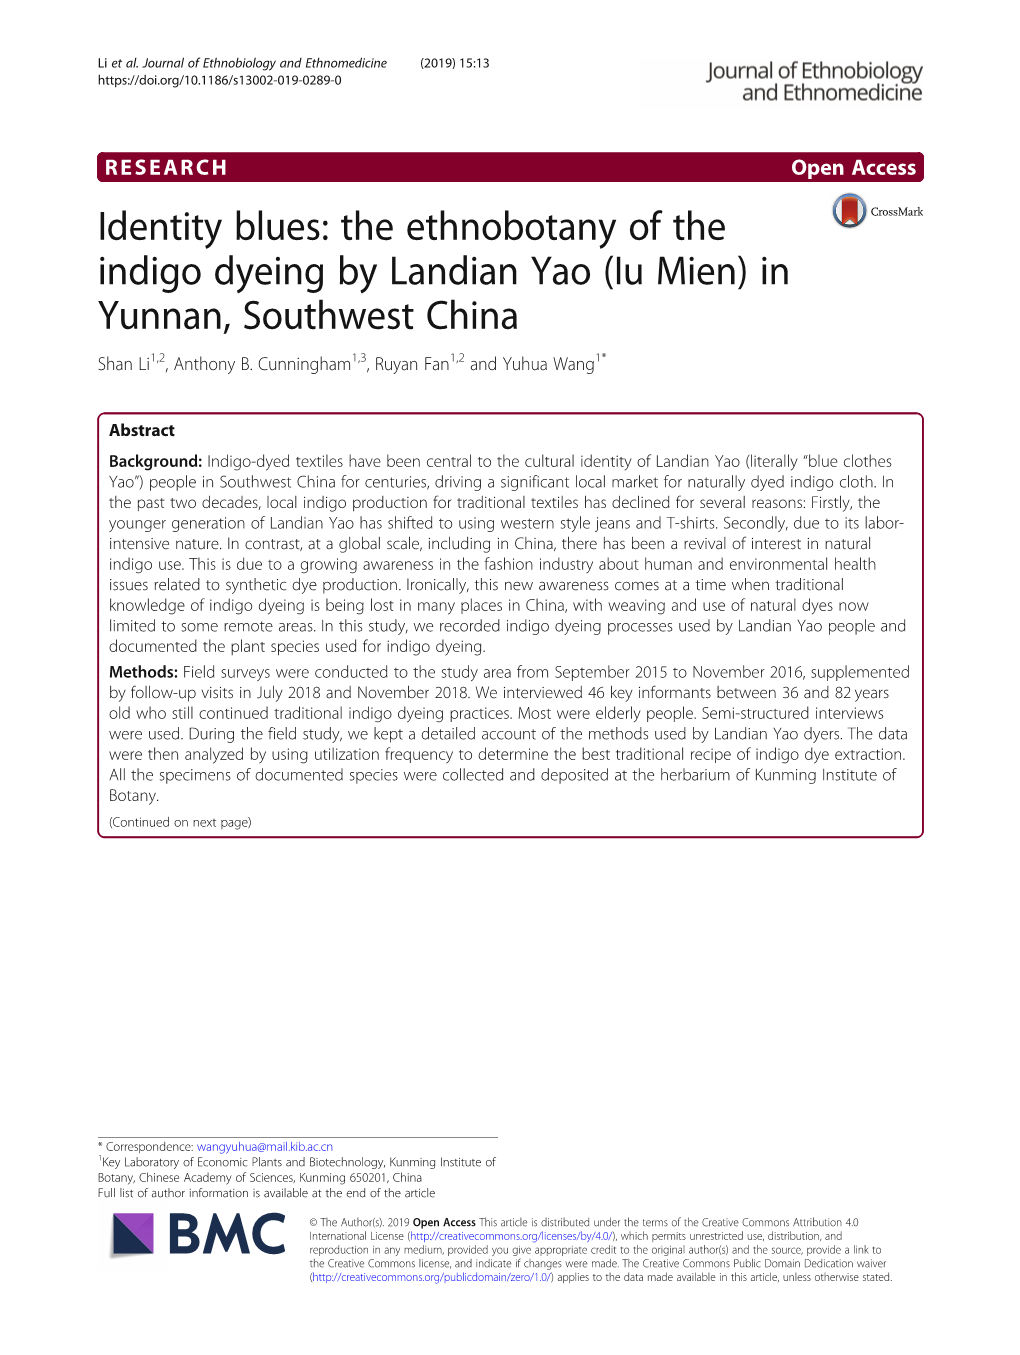 Identity Blues: the Ethnobotany of the Indigo Dyeing by Landian Yao (Iu Mien) in Yunnan, Southwest China Shan Li1,2, Anthony B